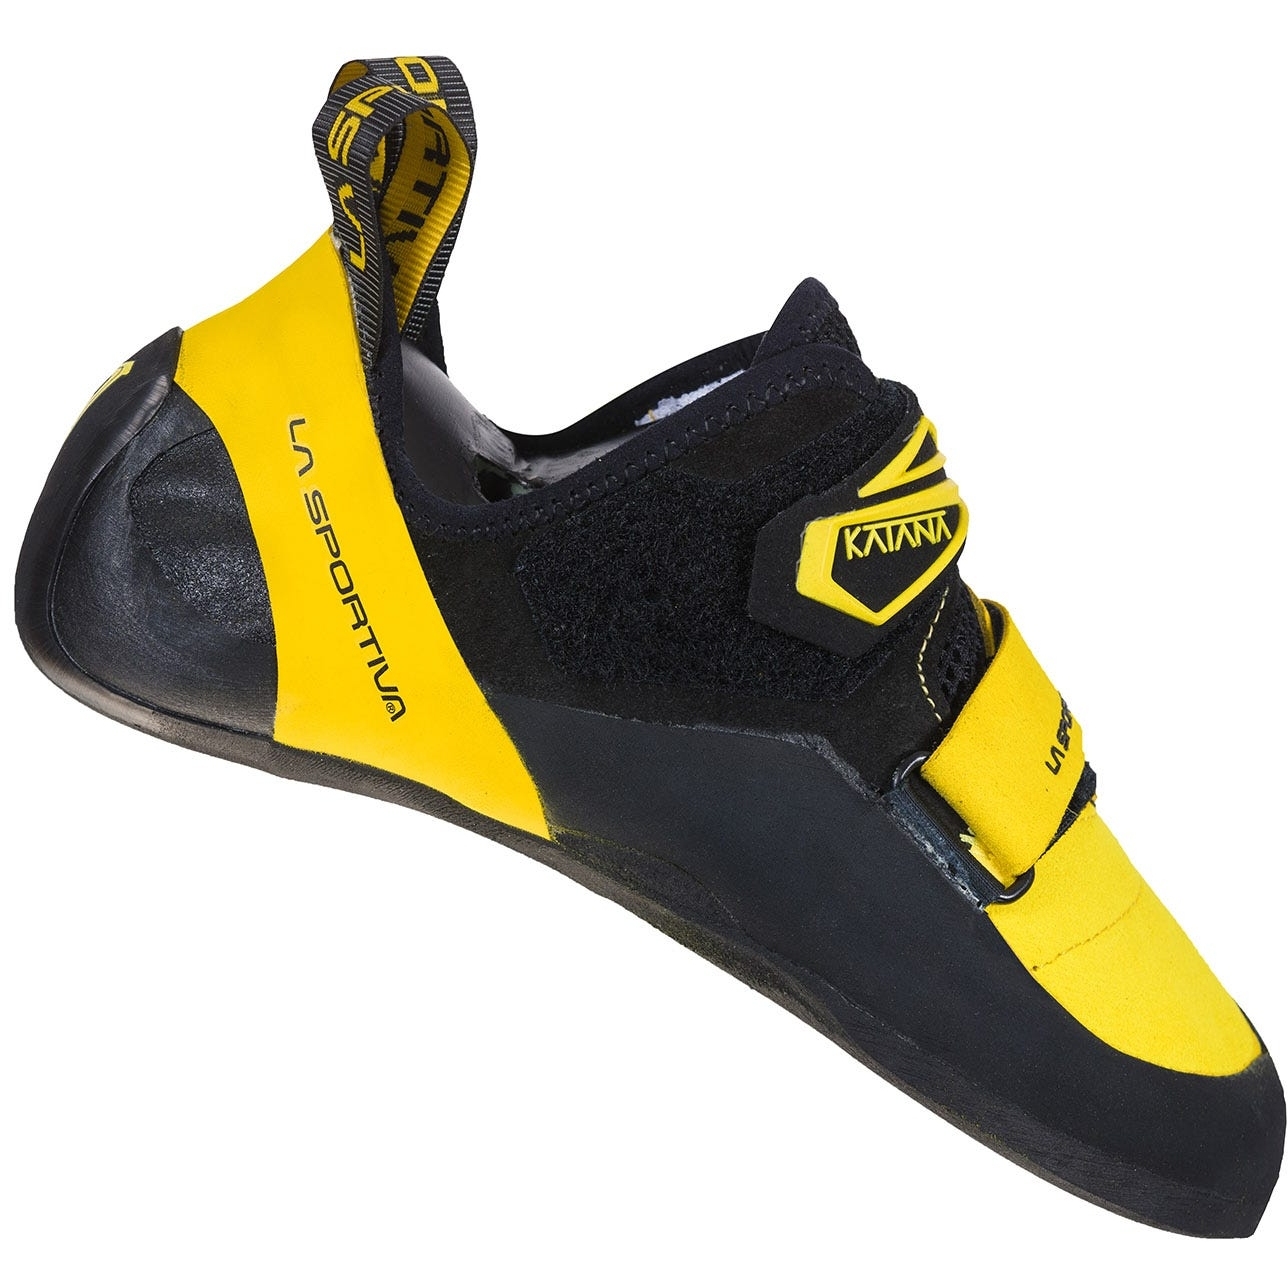 Picture of La Sportiva Katana Climbing Shoes - Yellow/Black 20L100999